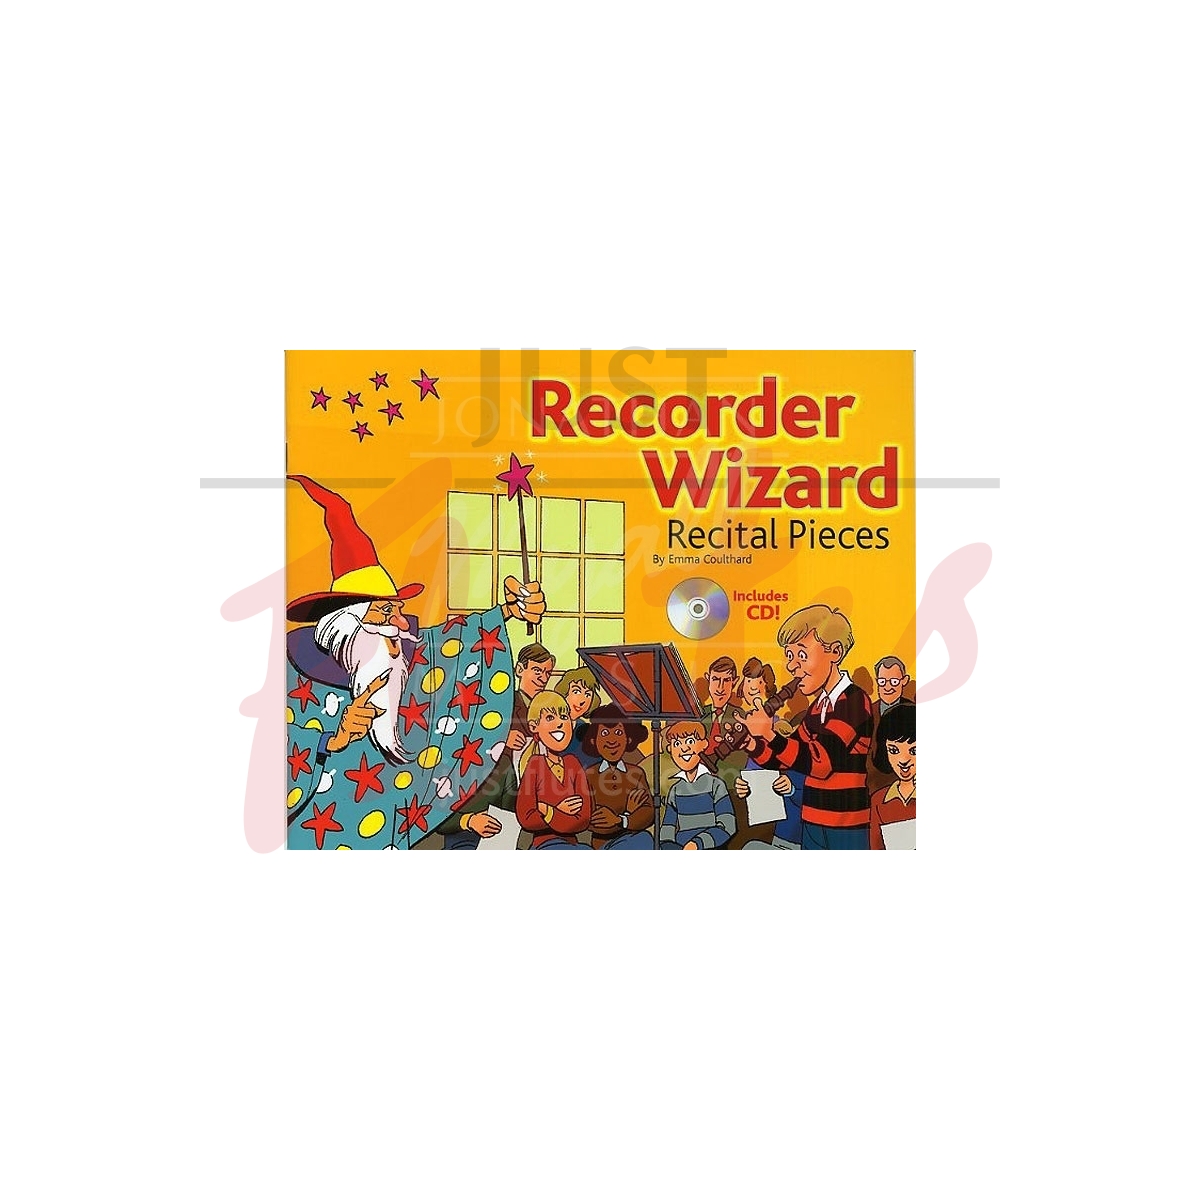 Recorder Wizard Recital Pieces [Pupil's Book]